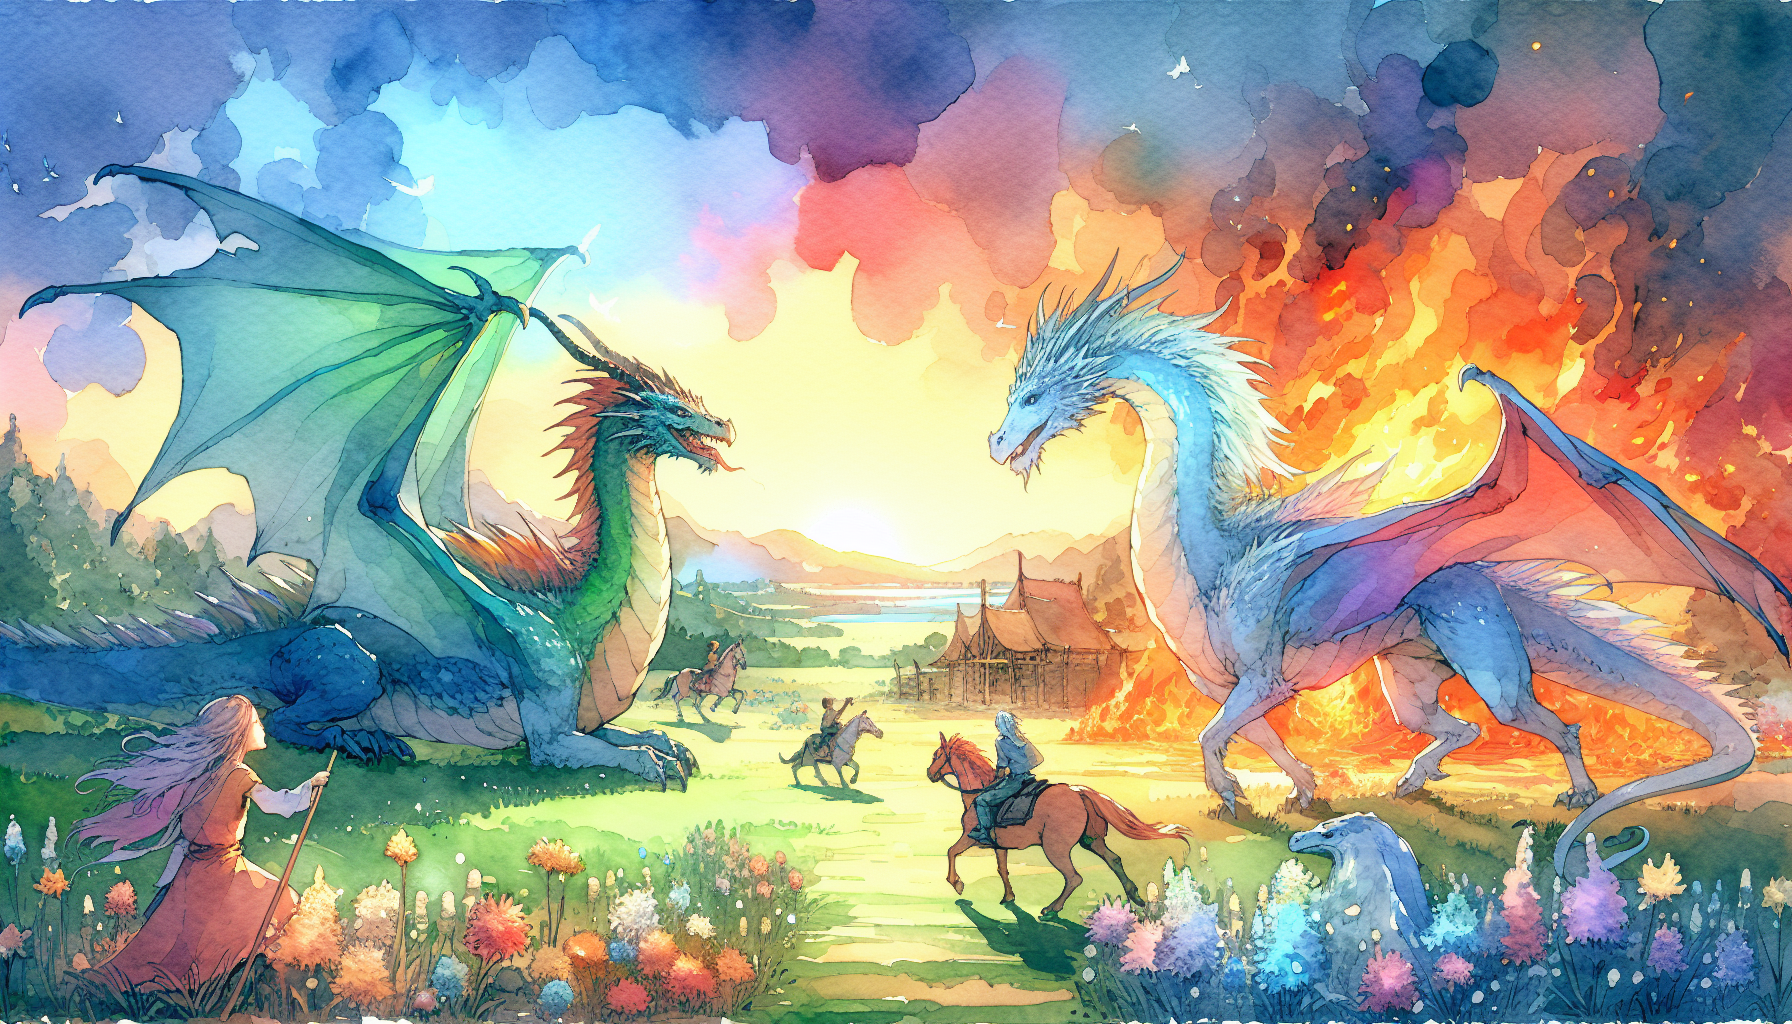 The Dragons Challenge Overcoming Adversity